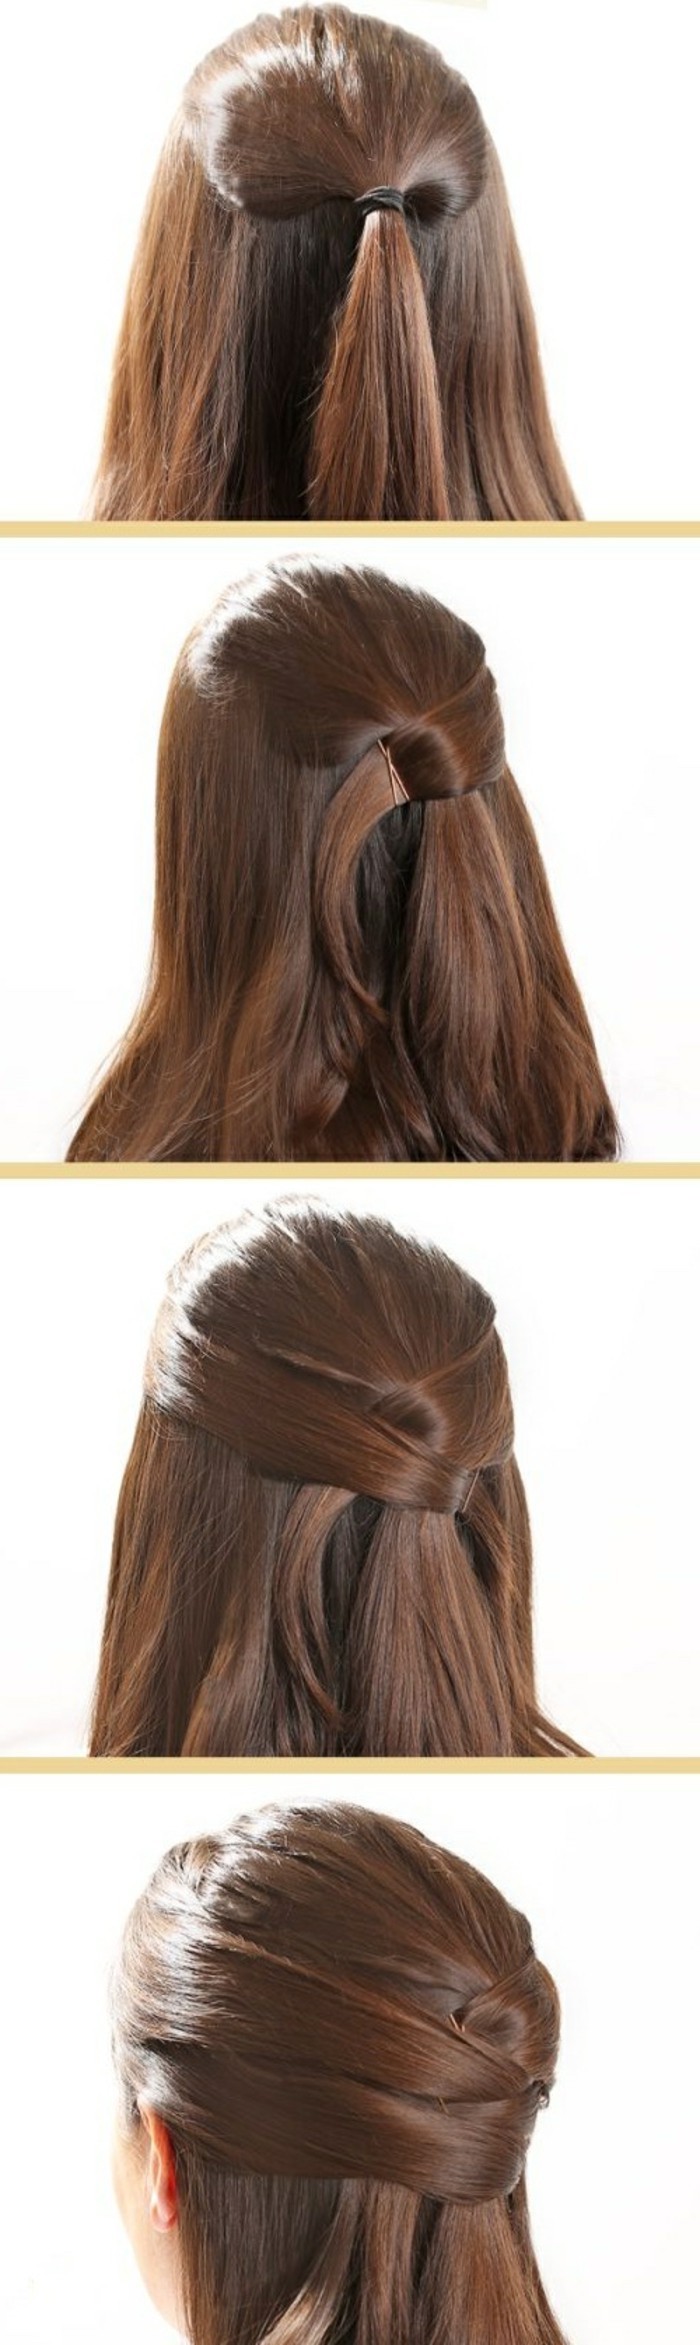 half up, half down hairstyle, long brown hair, braid hairstyles for long hair, step by step, diy tutorial